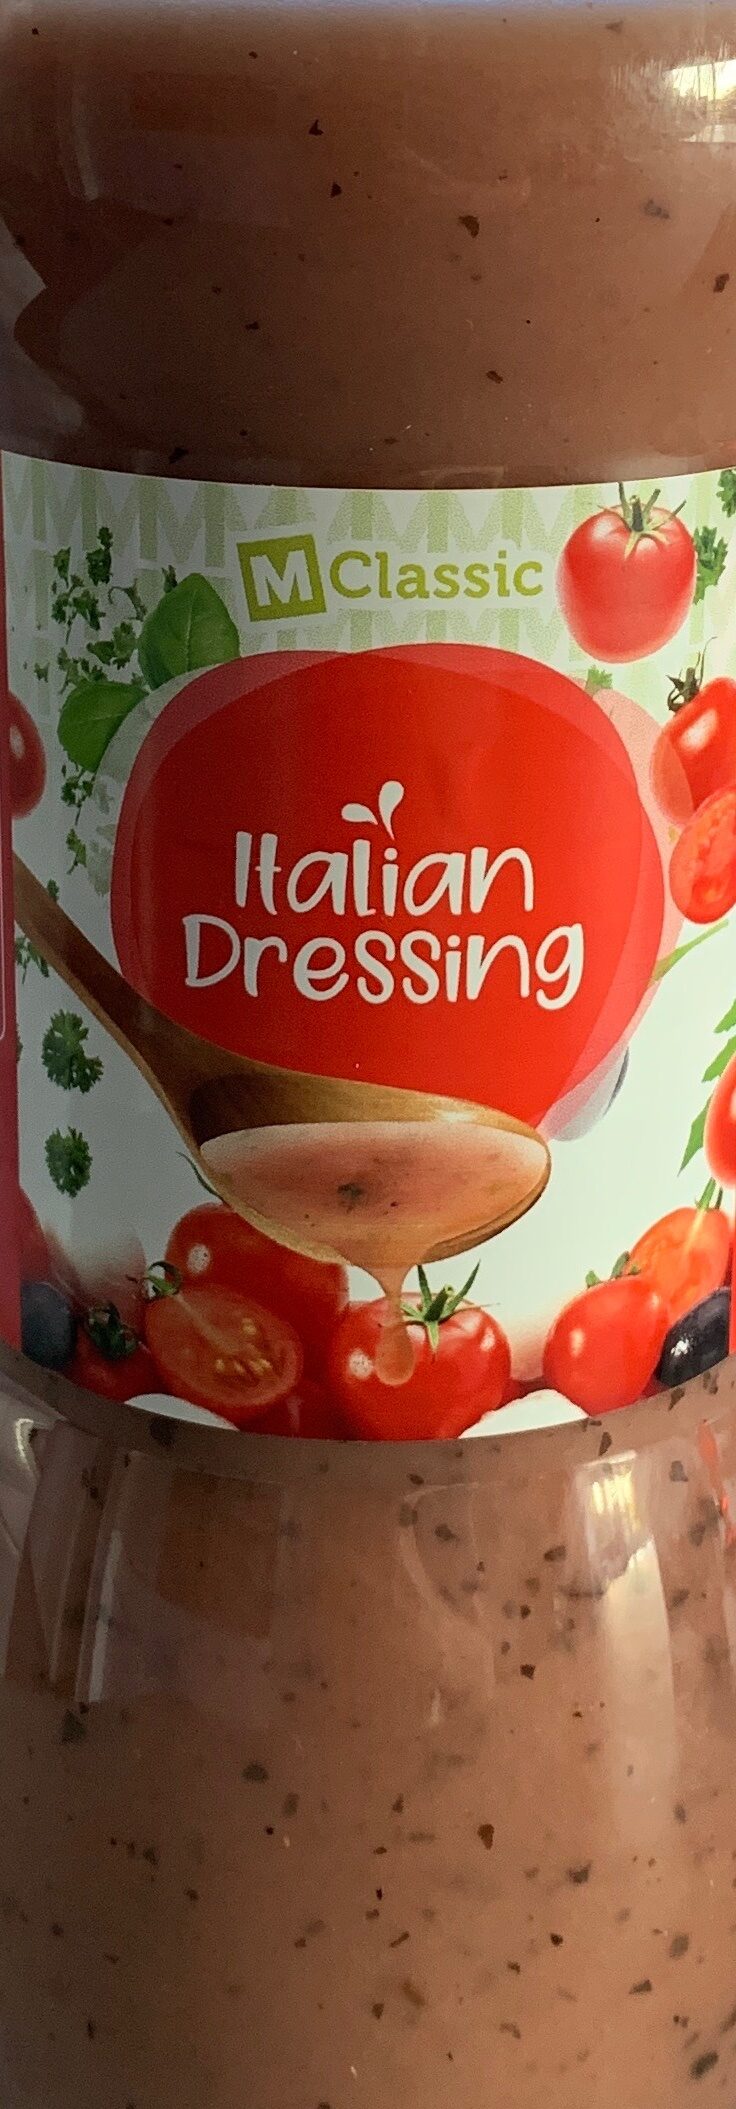 sauce salade italienne - Prodotto - en